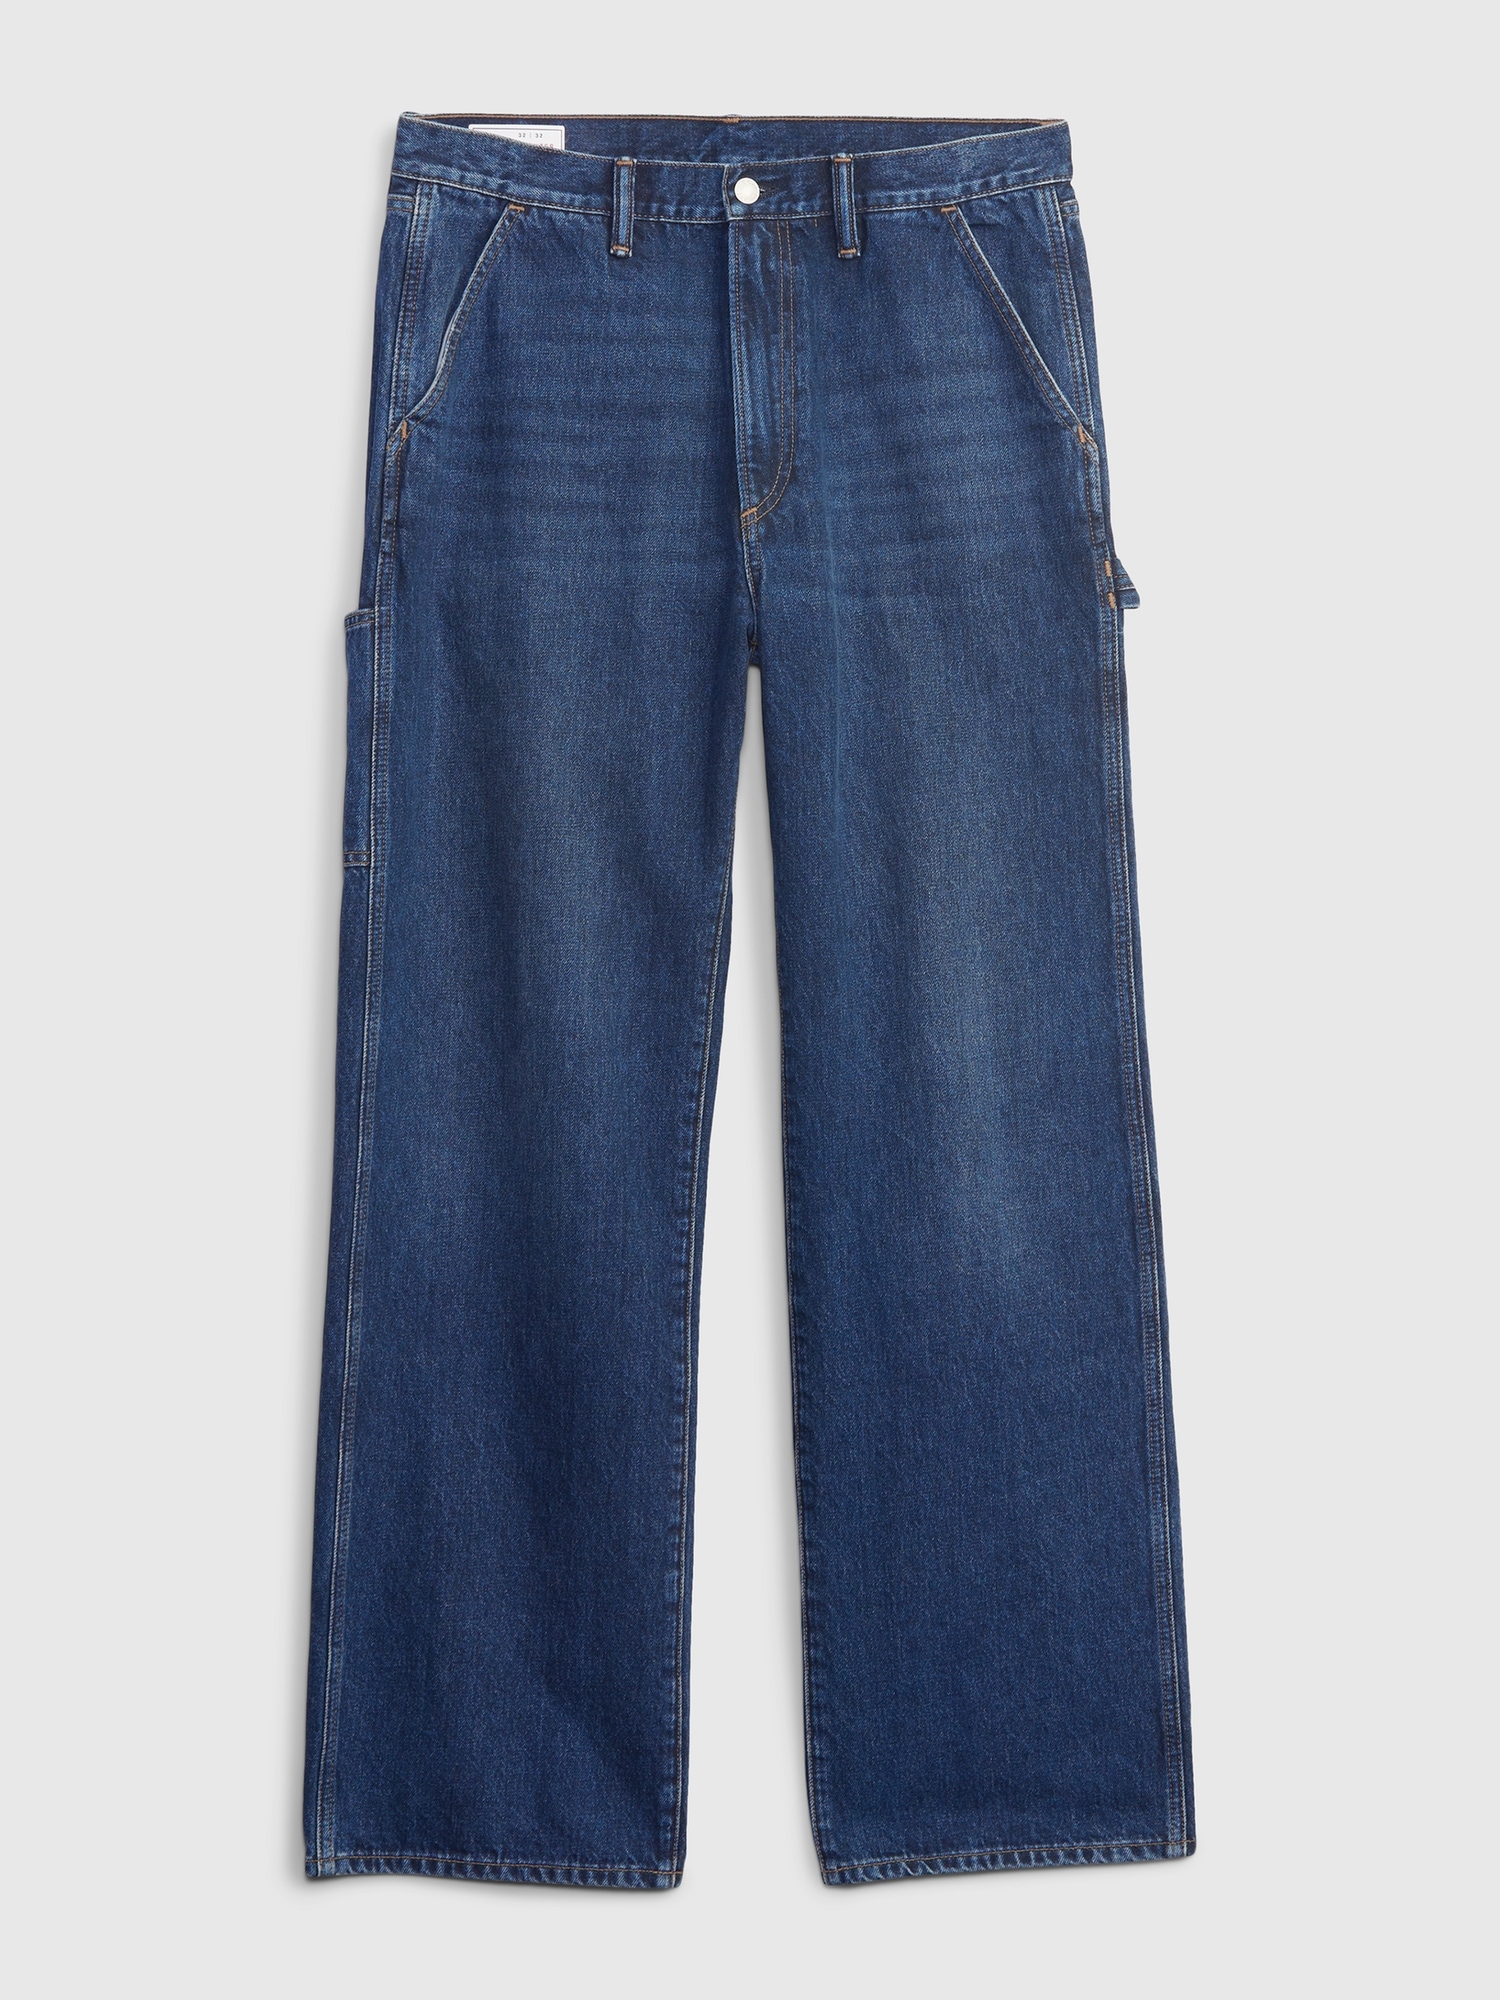 Vintage 1990s Carhartt Denim Jeans Size 34 X 34 / 90s Carpenter